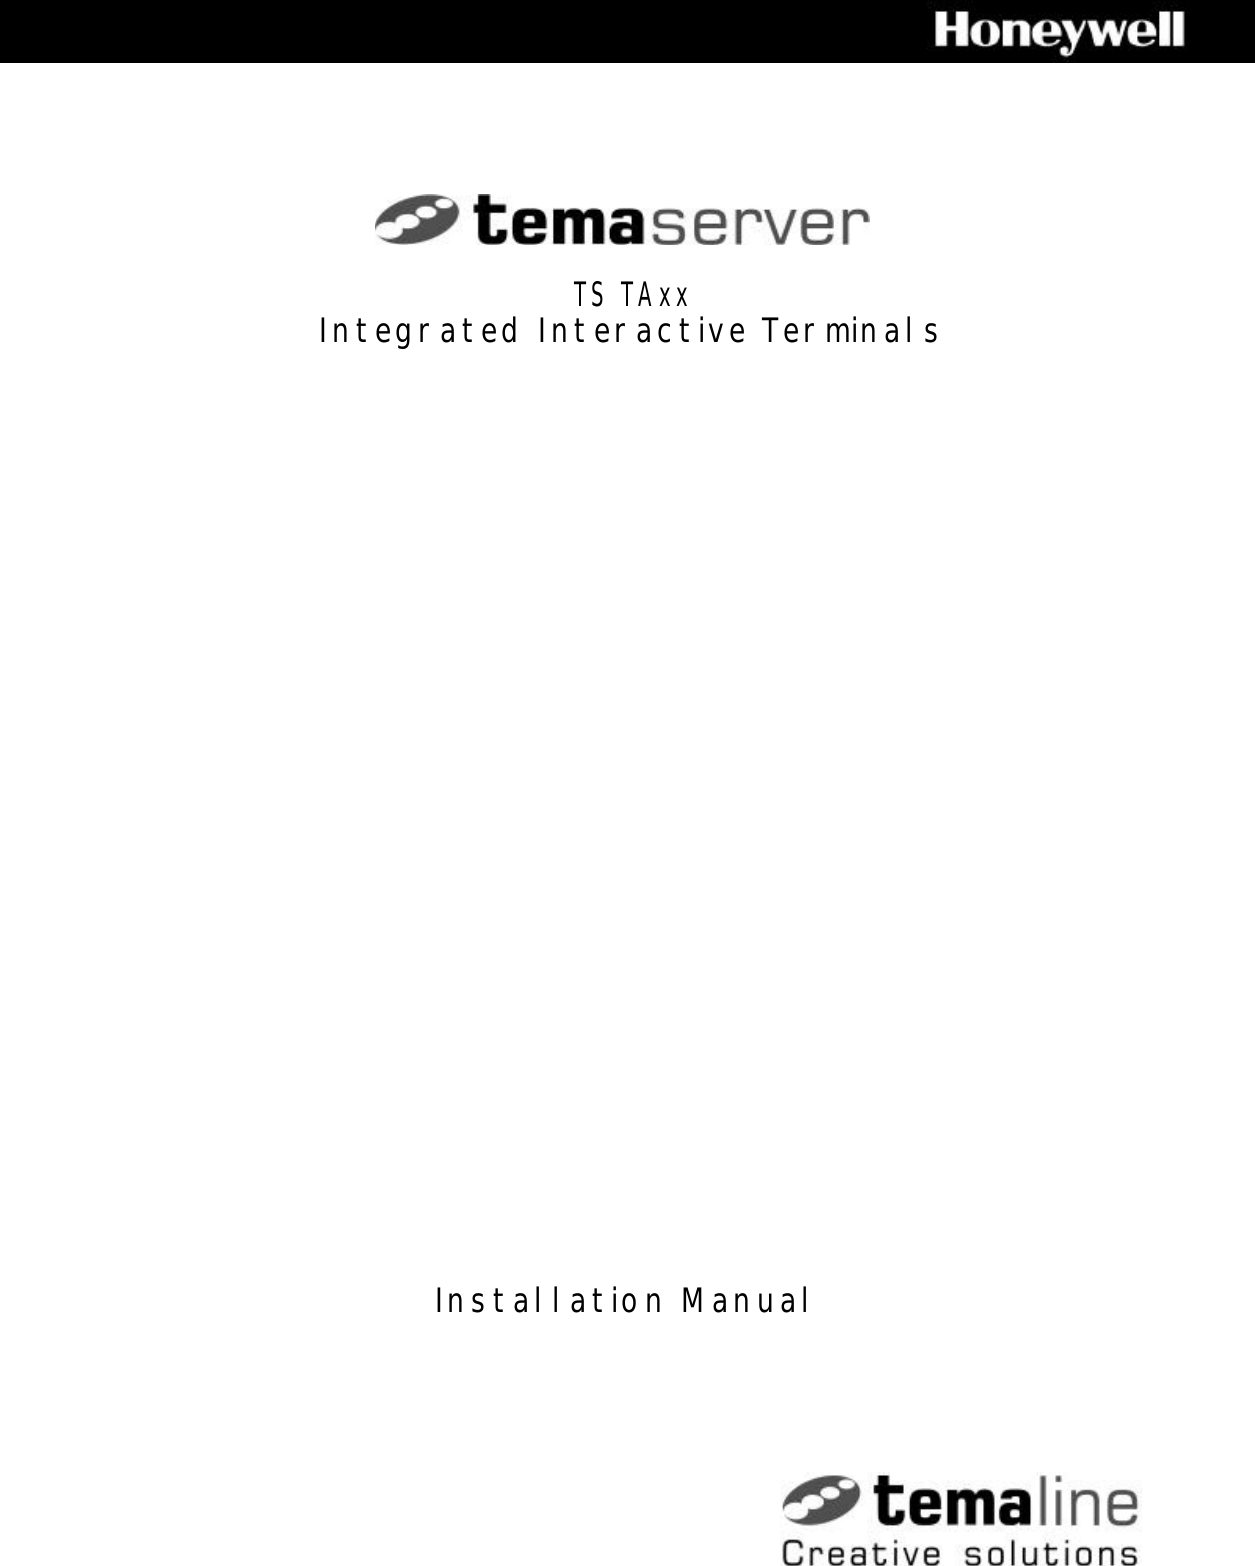    TS TAxx Integrated Interactive Terminals Installation Manual 